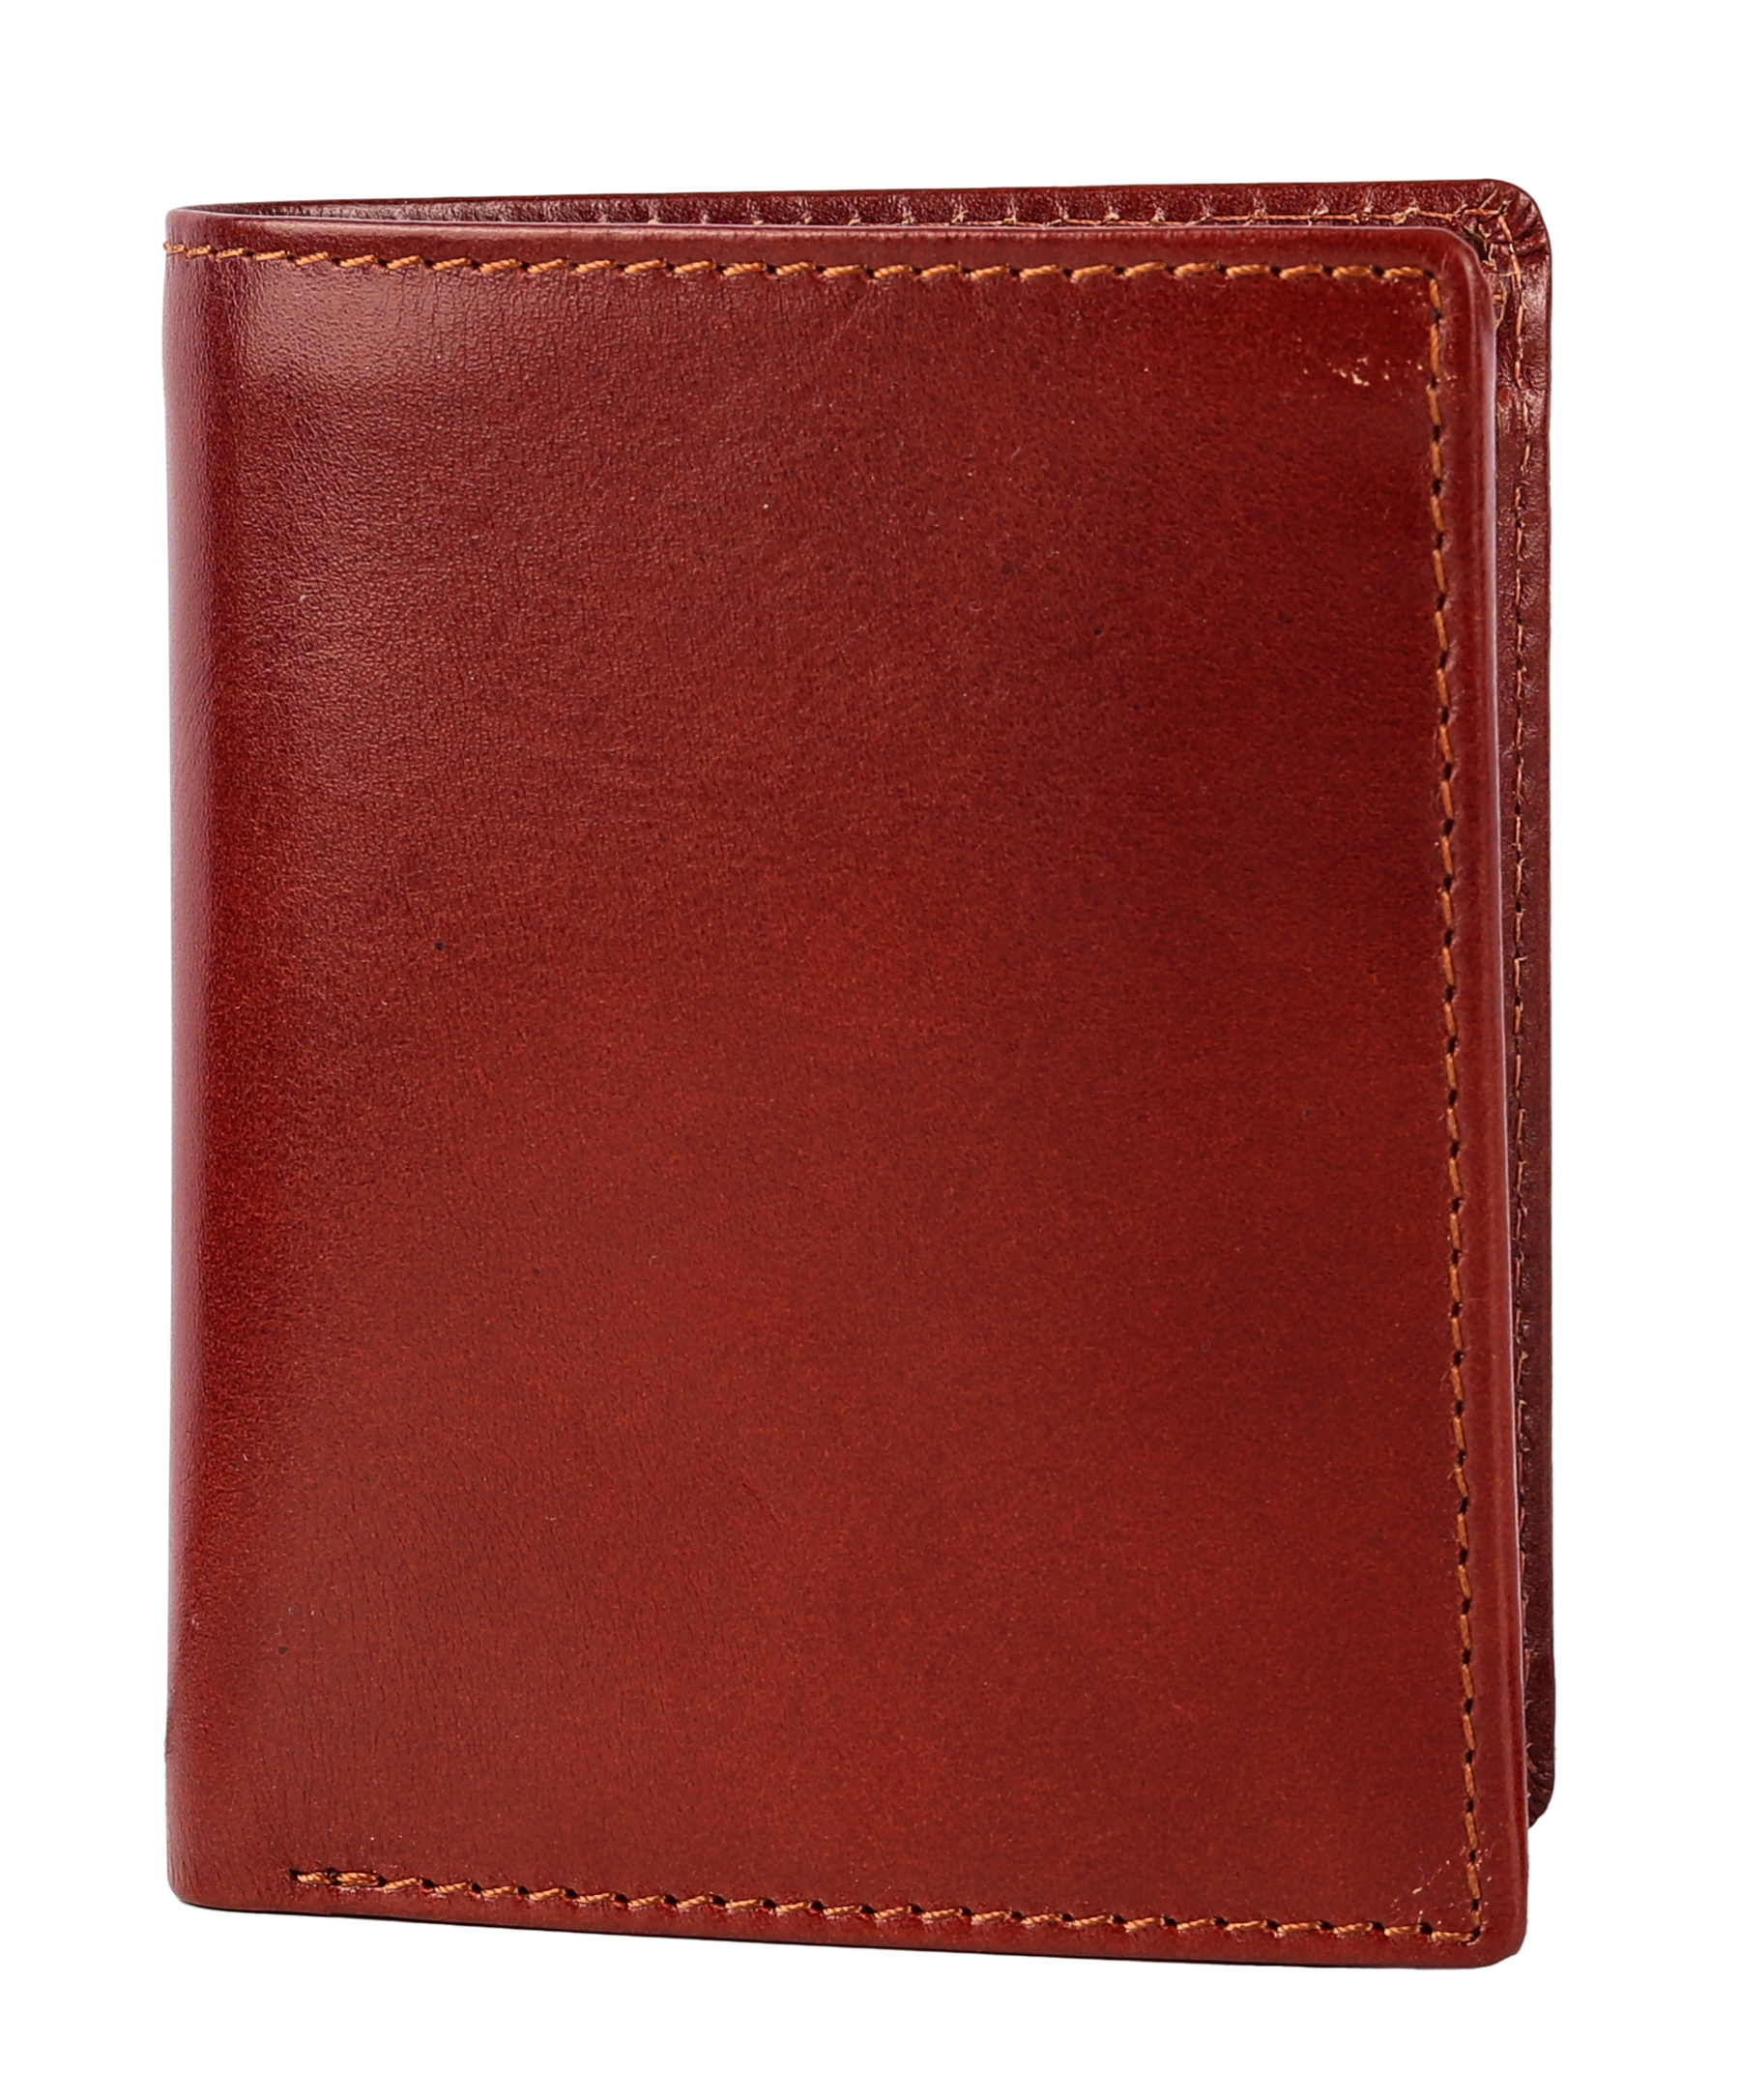 BOL Men's Upright Bifold Leather Wallet